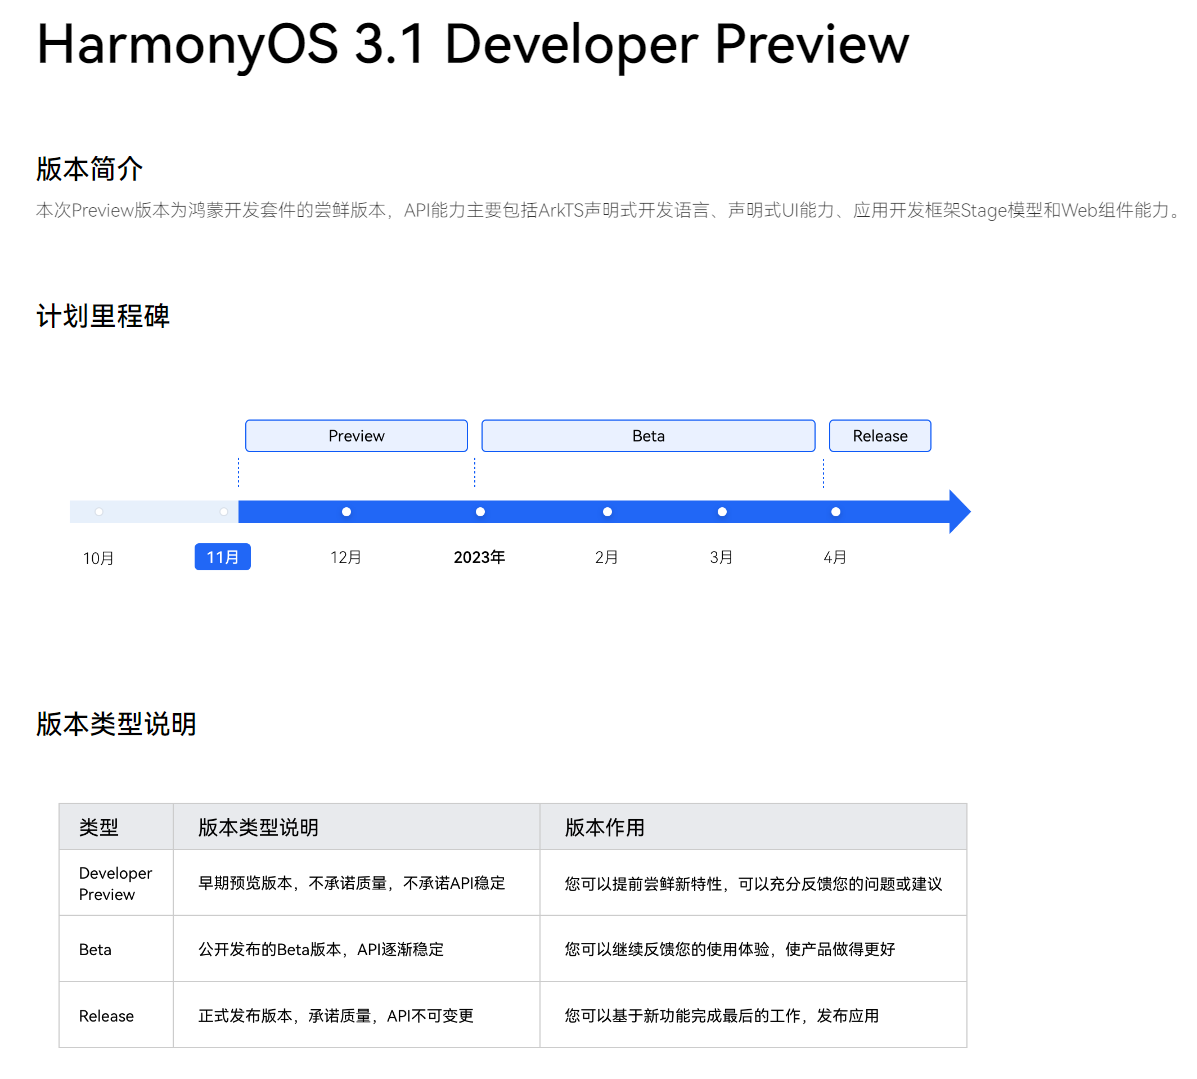  HarmonyOS 3.1  Beta 汾